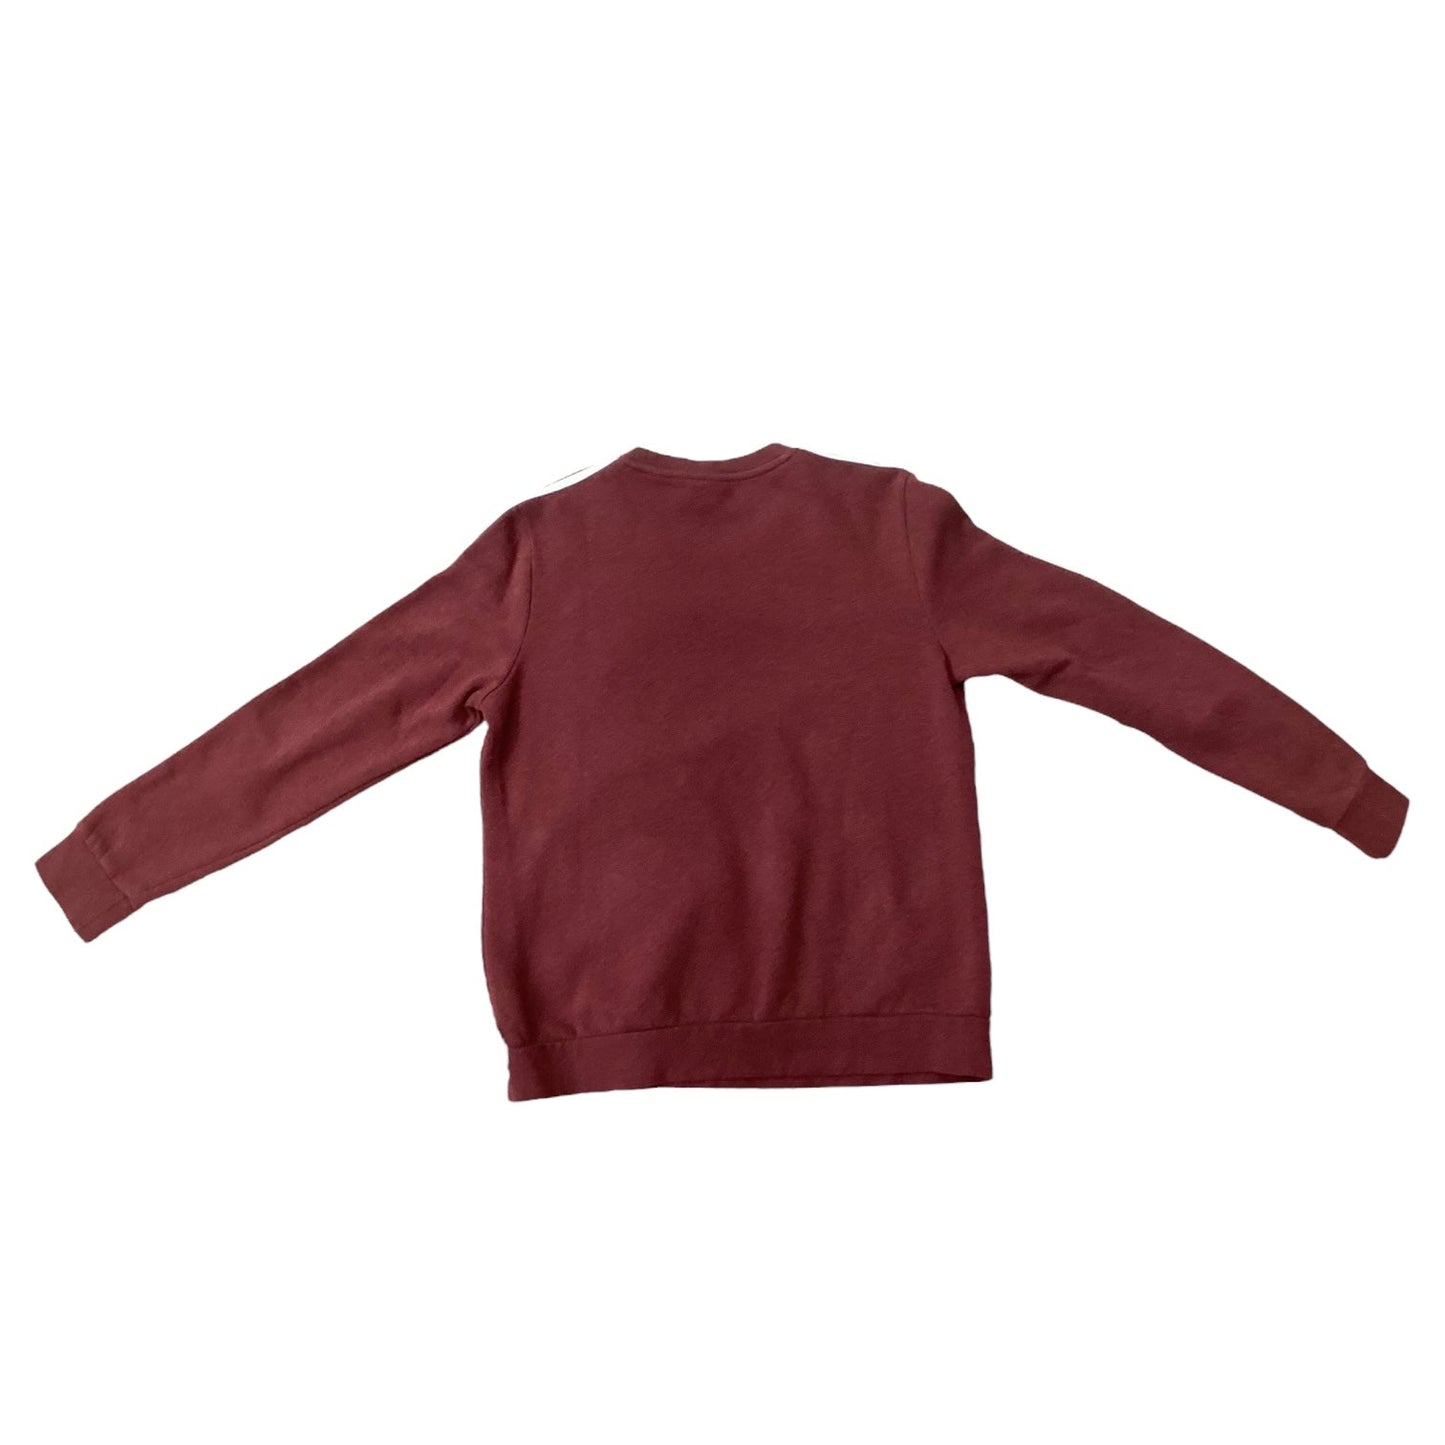 Red Athletic Sweatshirt Crewneck Adidas, Size L